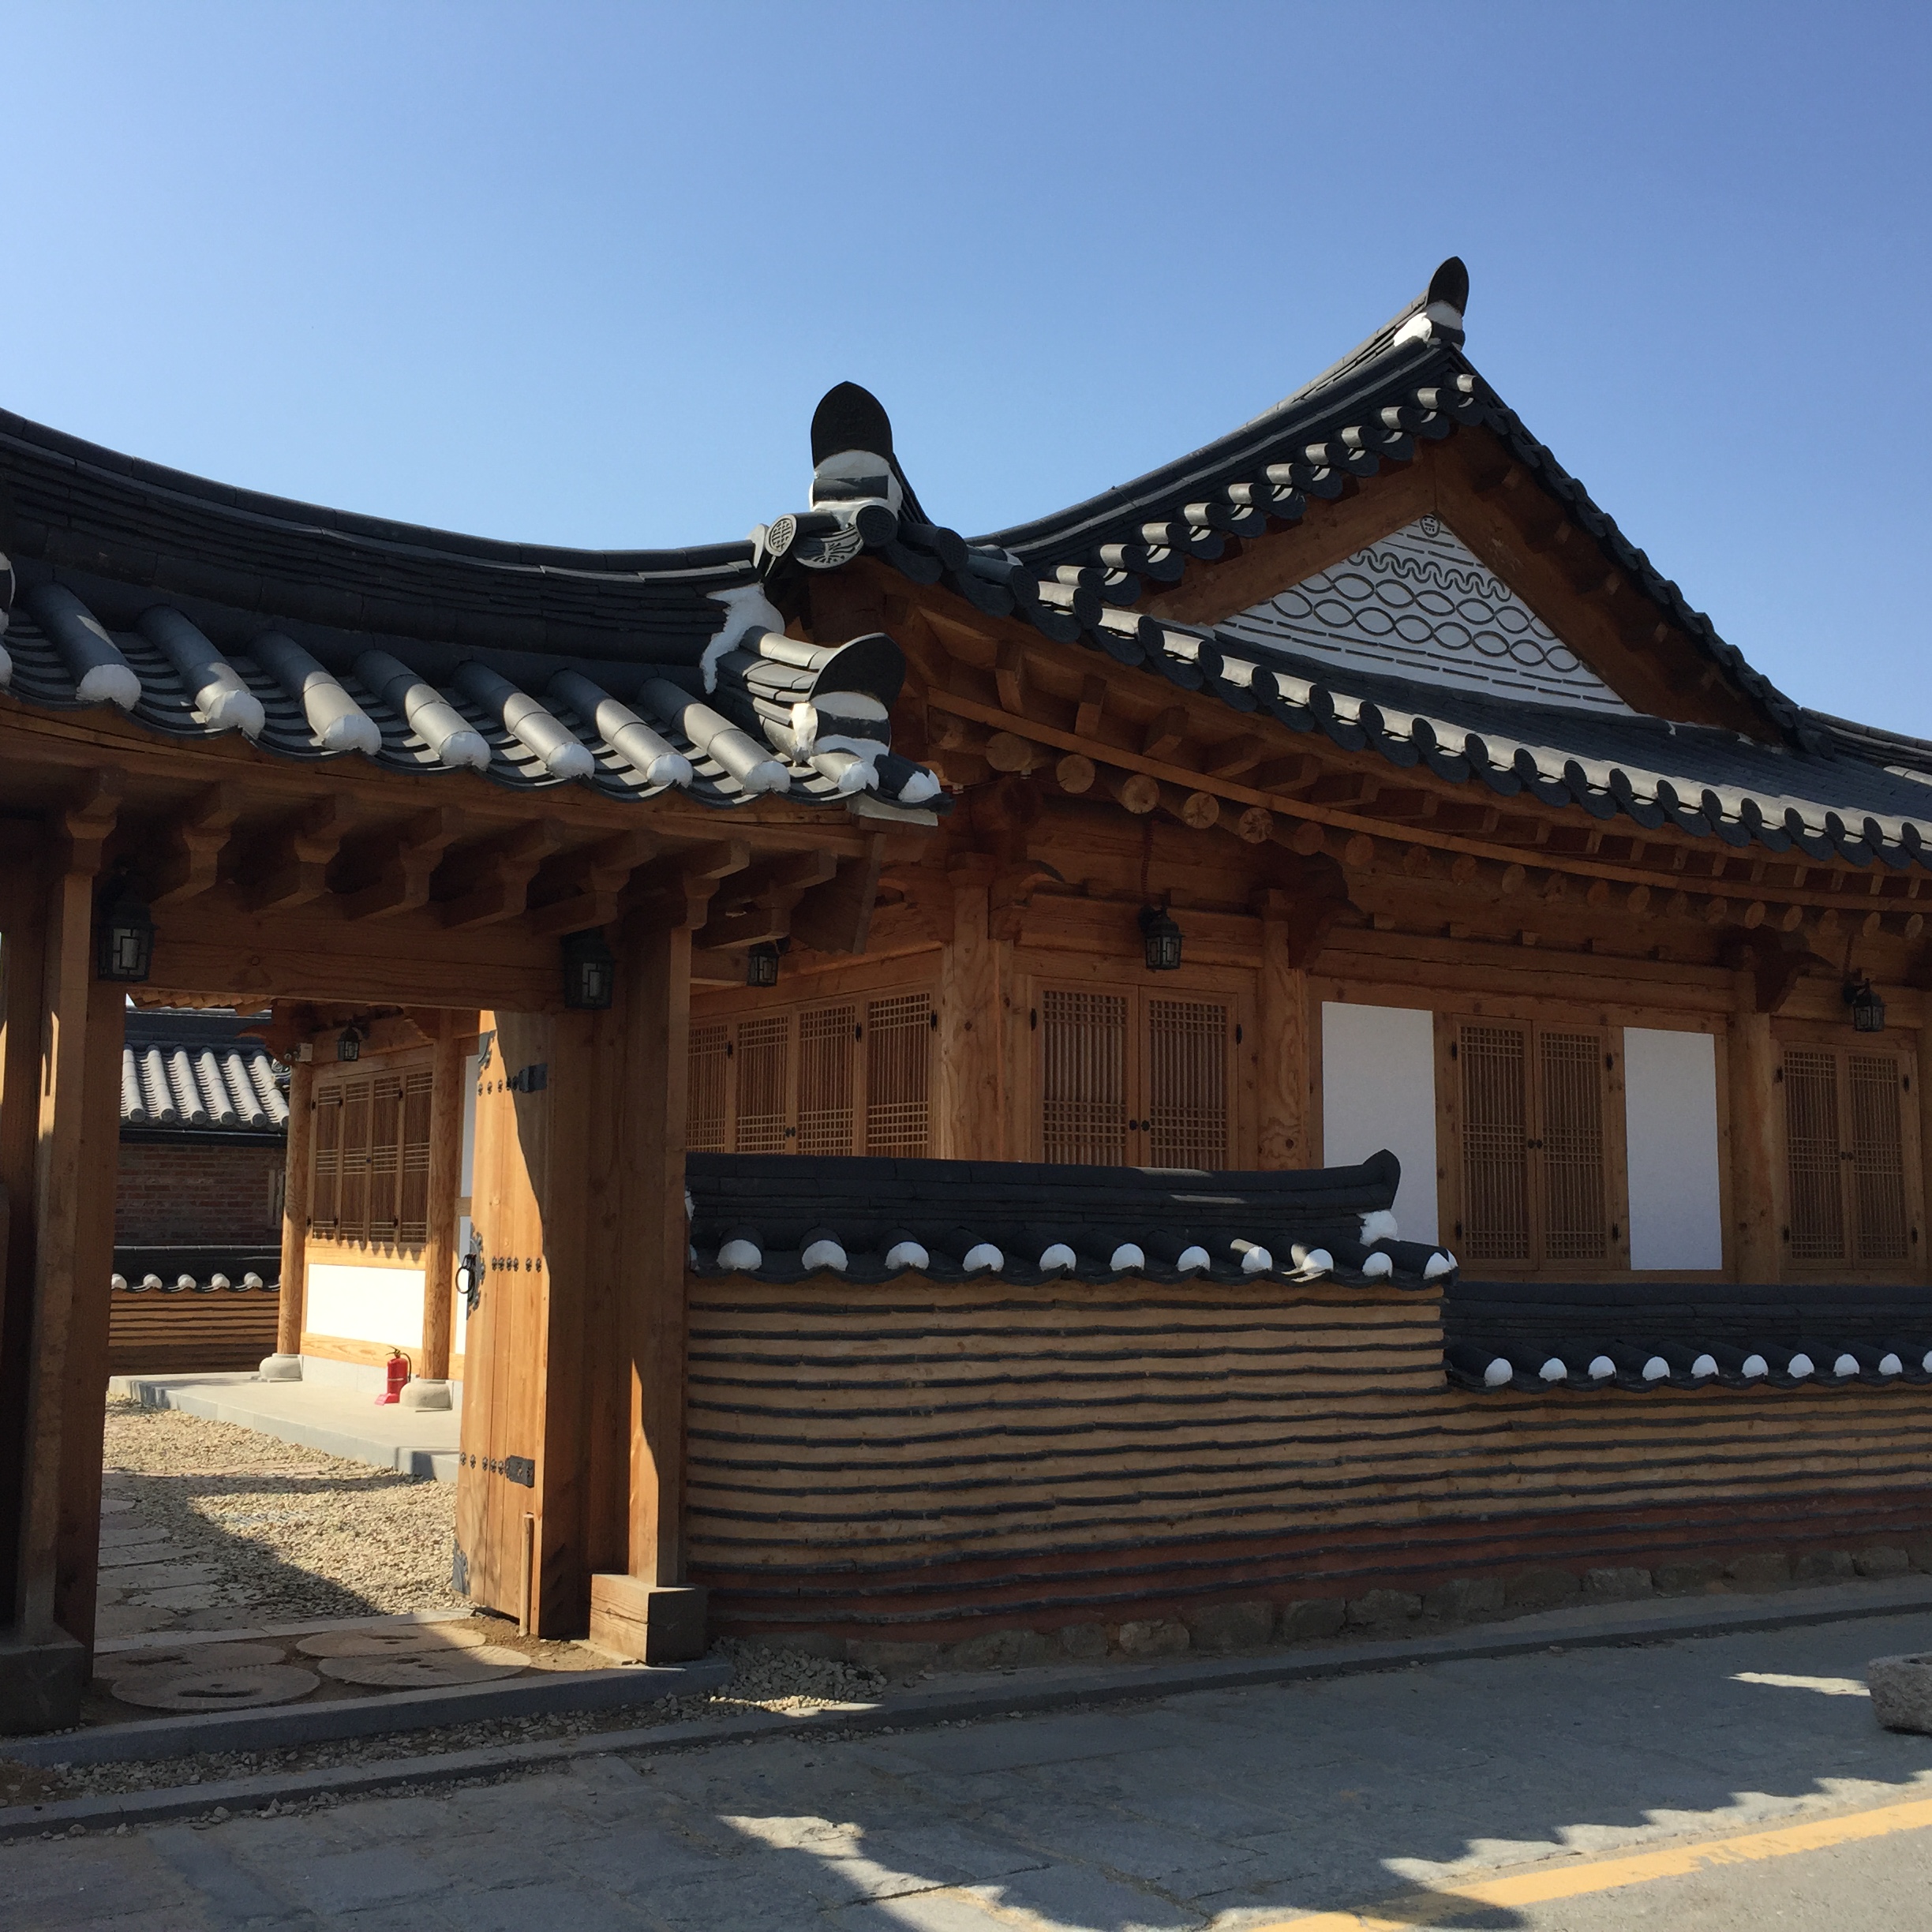 Jeonju Hanok Village Seonbi Culture Cente 1번째 이미지